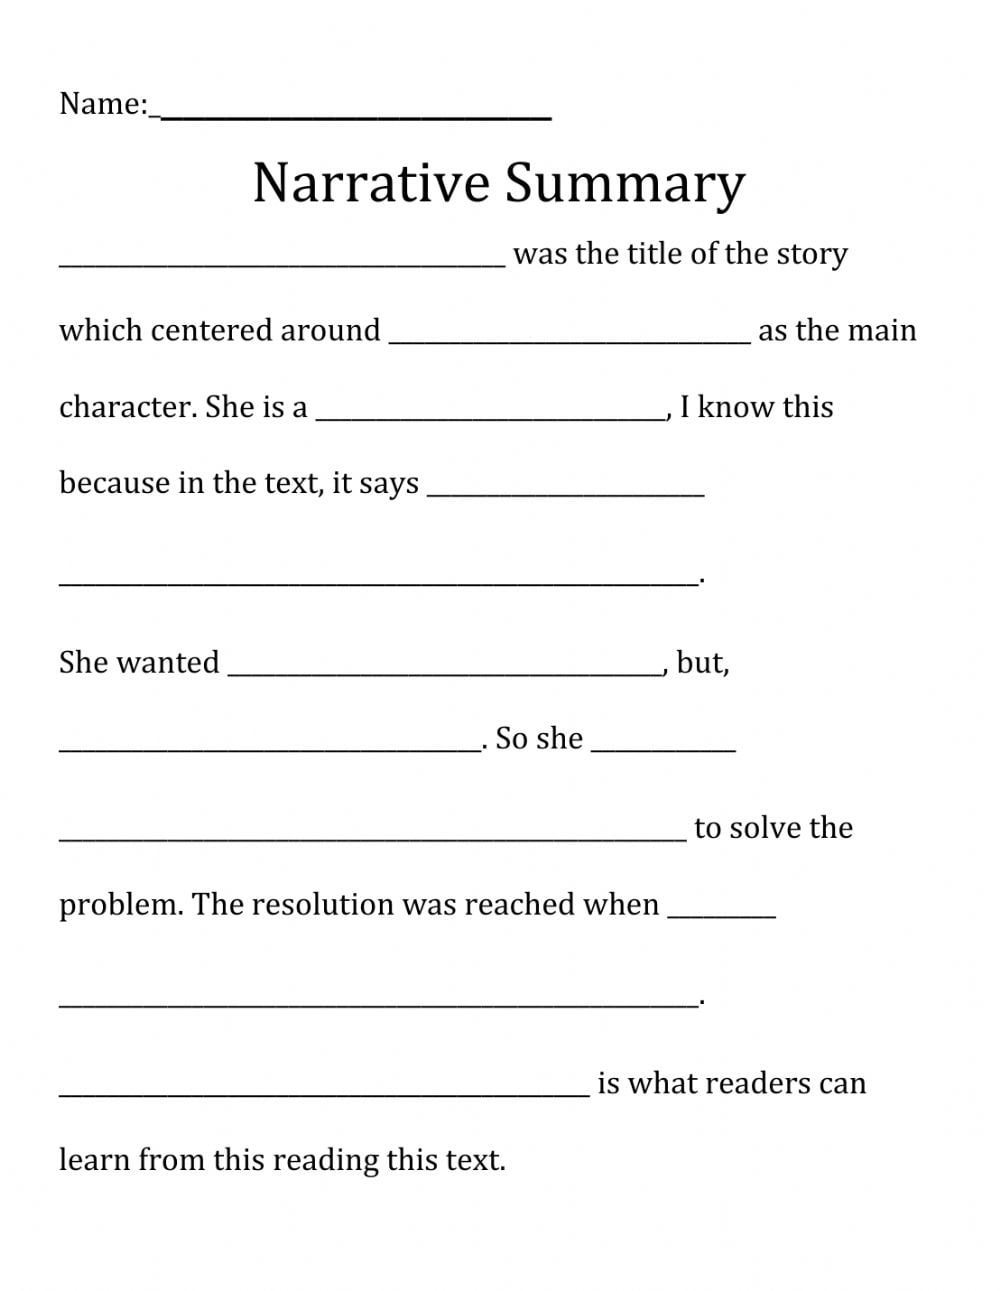 Narrative Summary Worksheet